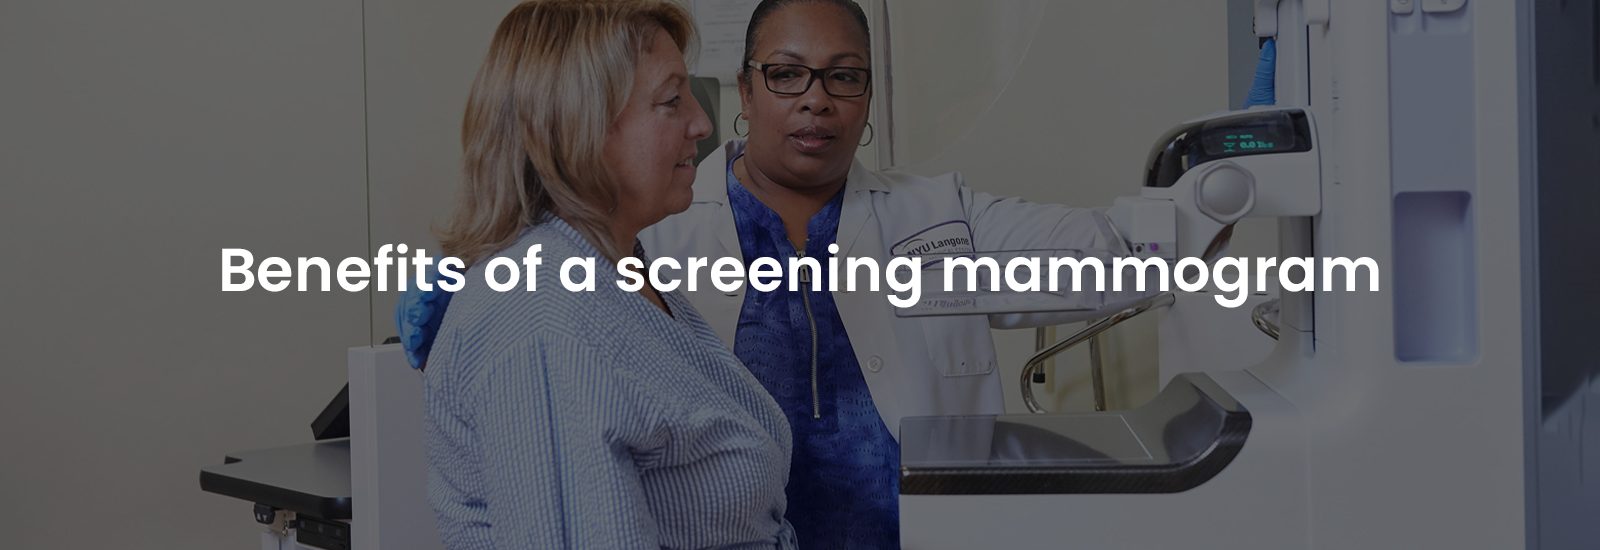 Benefits of a Screening Mammogram | Banner Image